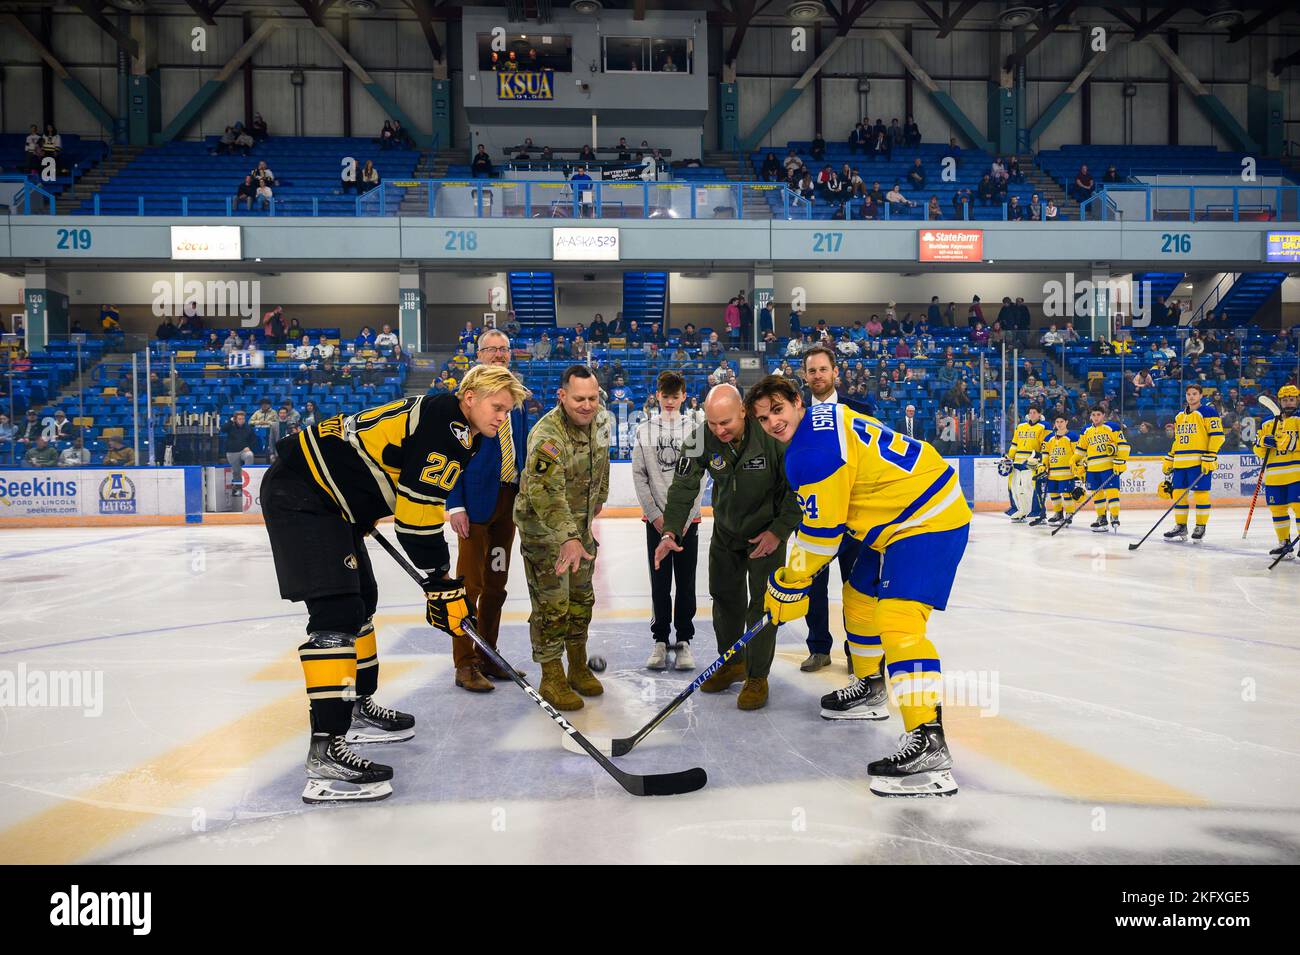 DVIDS - Images - Alaska Aces host military appreciation weekend